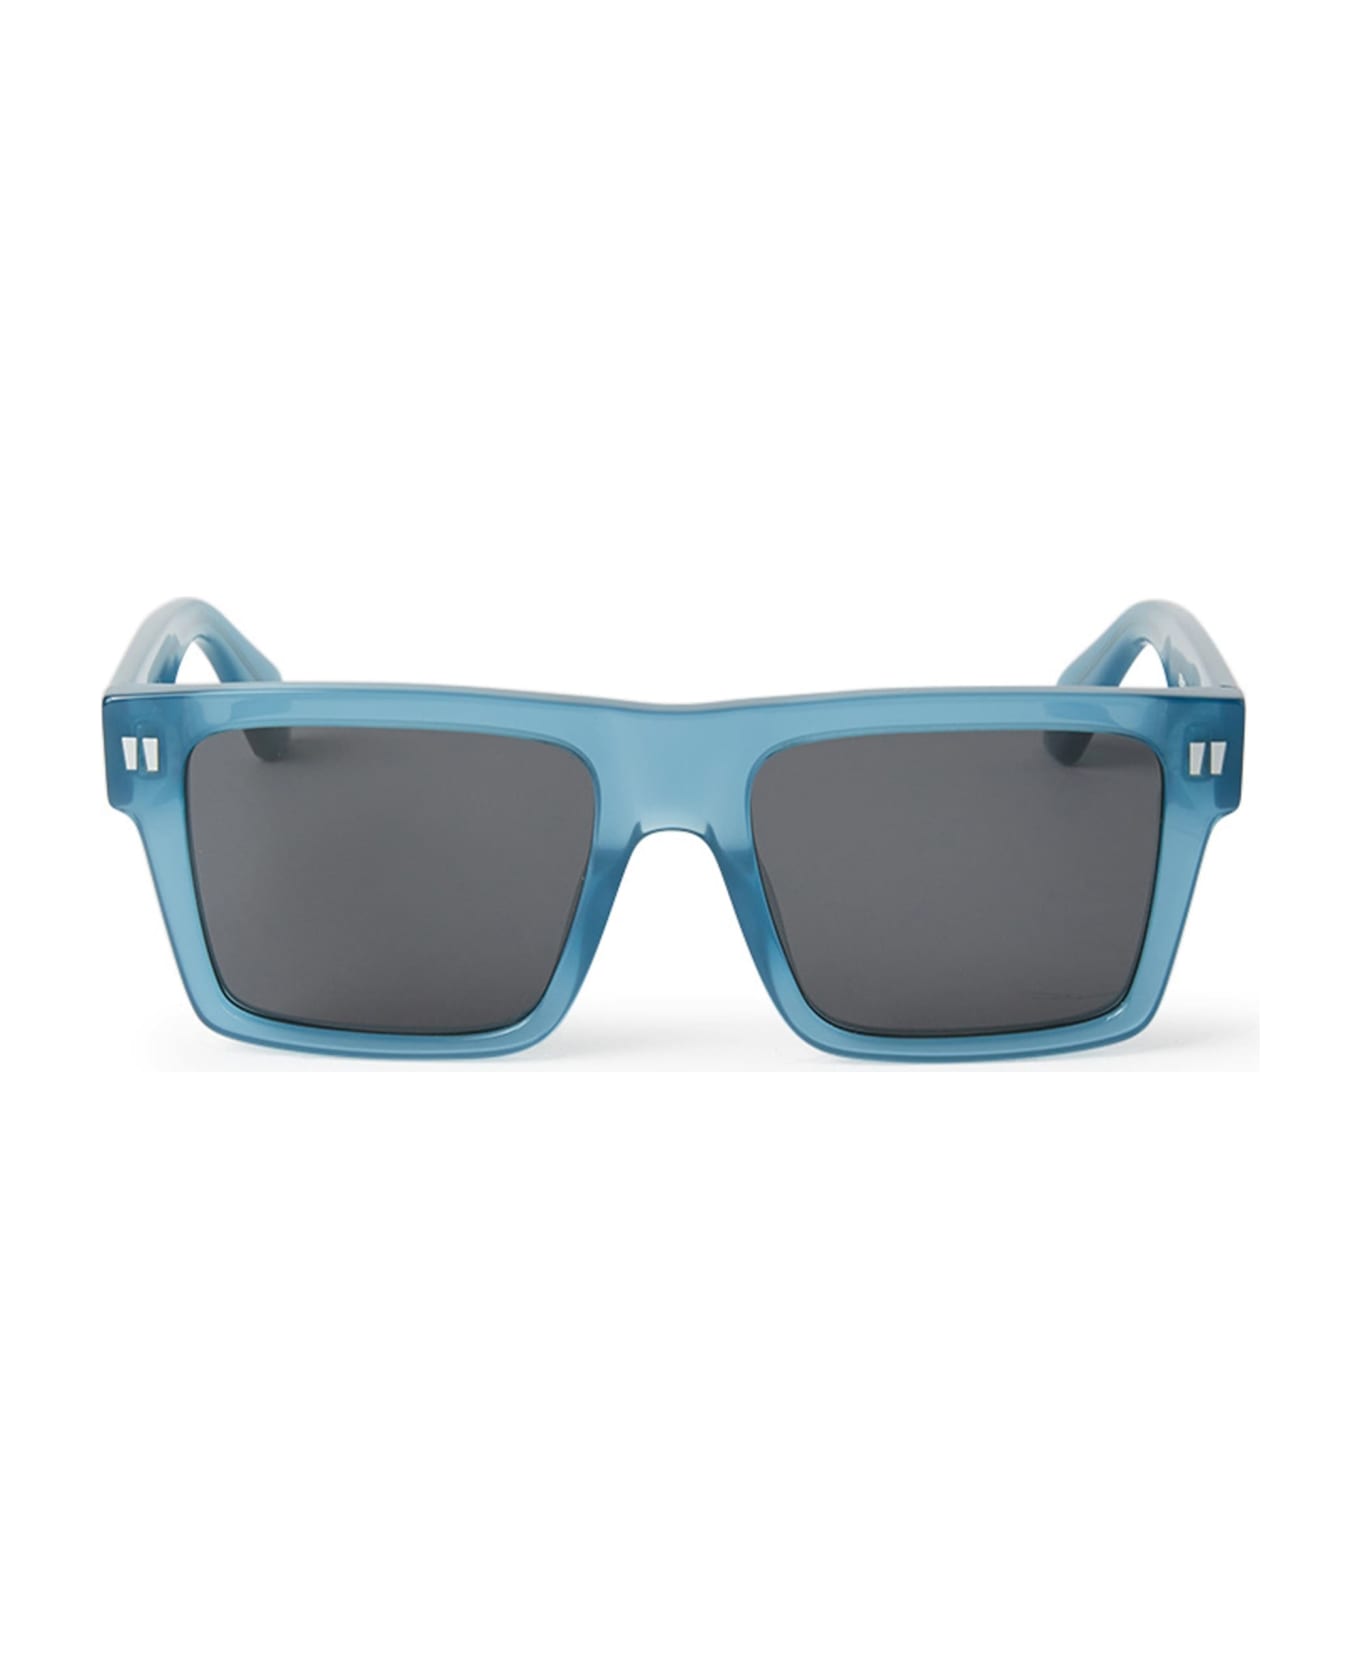 Off-White Lawton Sunglasses - blue サングラス